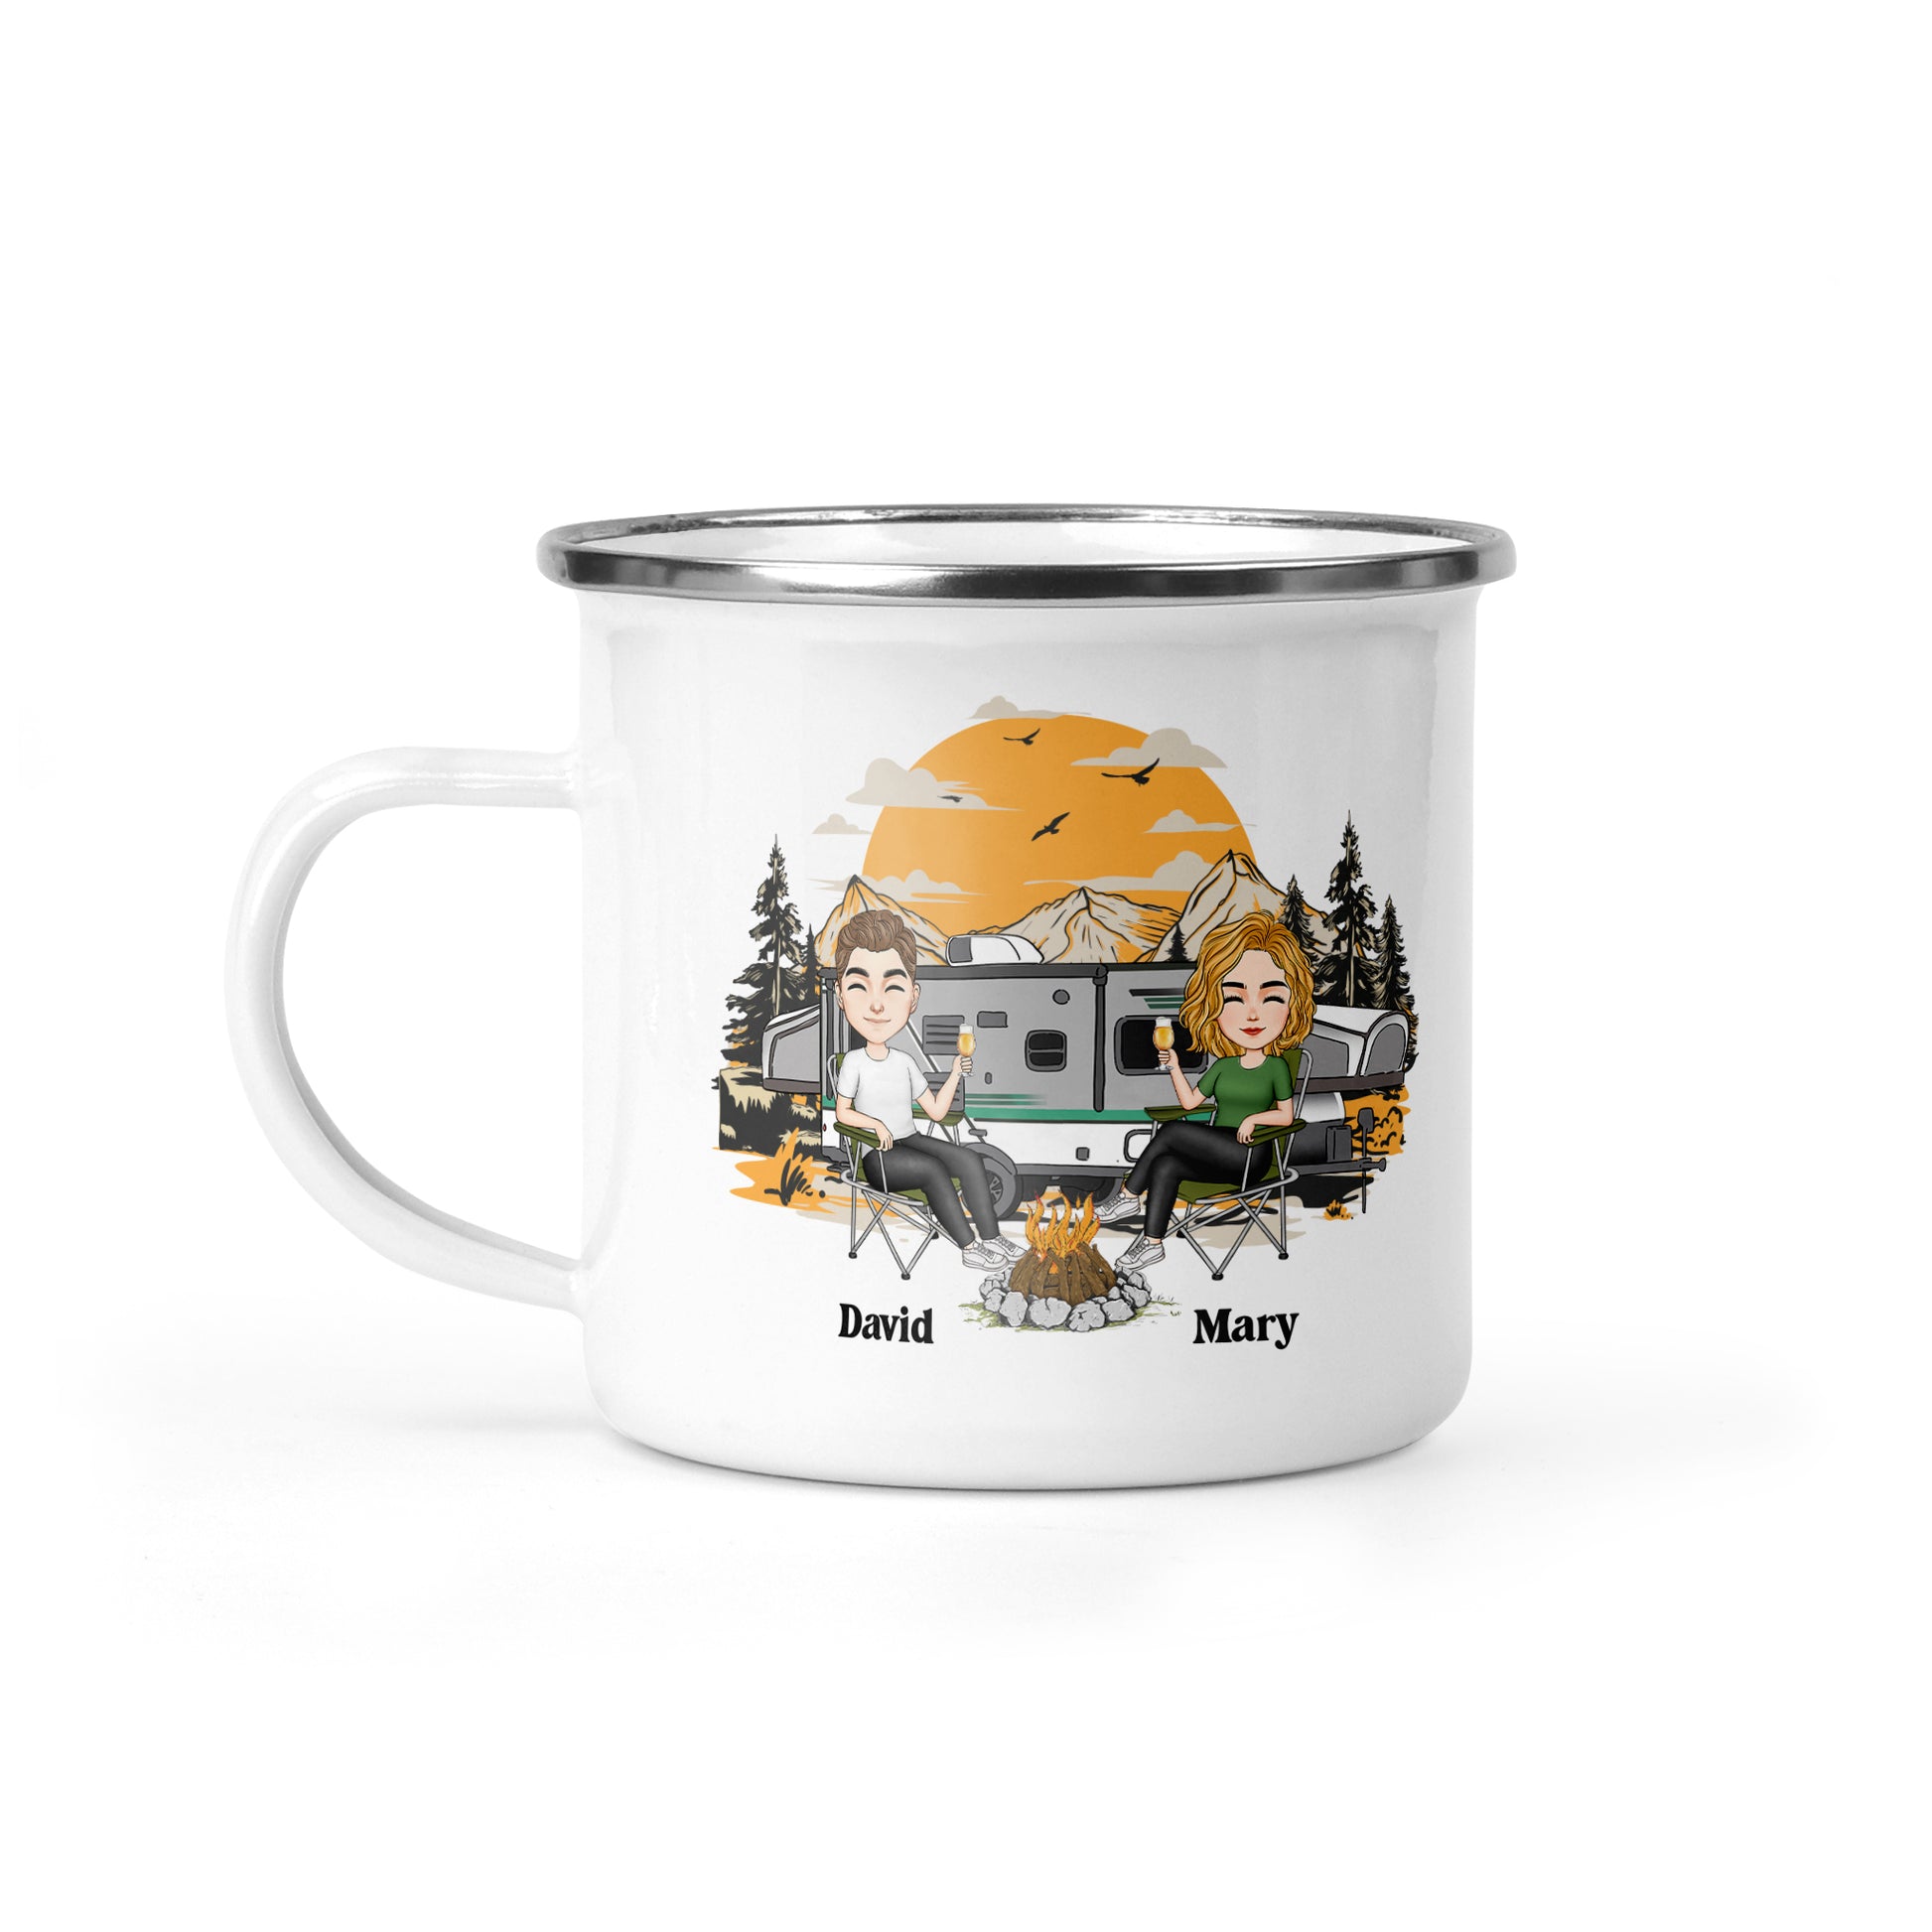 Enamel Camping Mug. Campers Life Quote Cup 12 oz. Happy Camper Coffee Mug  Gift.